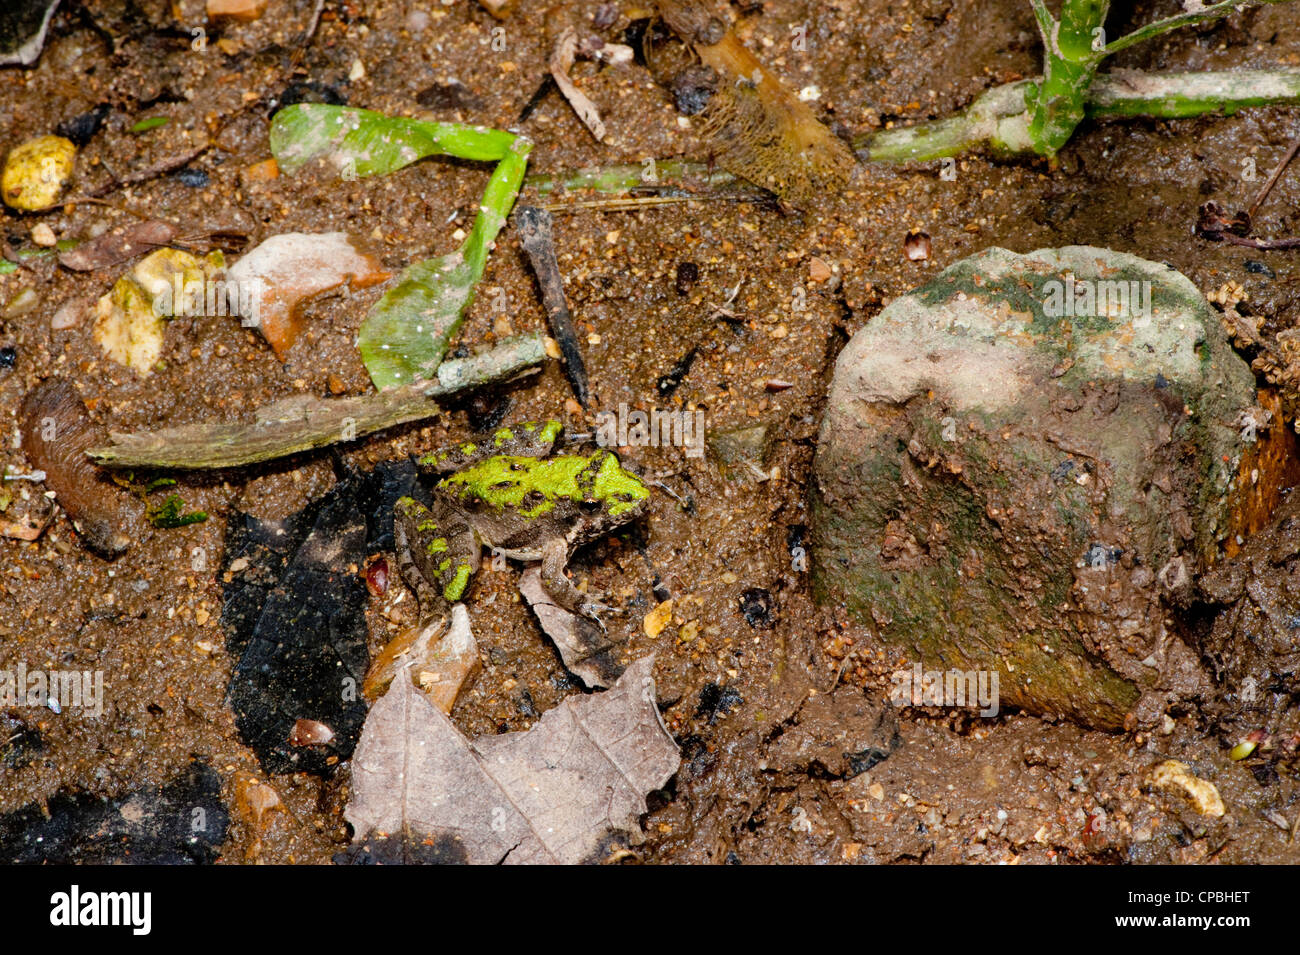 Northern Cricket Frog Acris crepitans blanchardi Flat Creek, Barry County, Missouri, Stati Uniti 29 aprile adulto Foto Stock